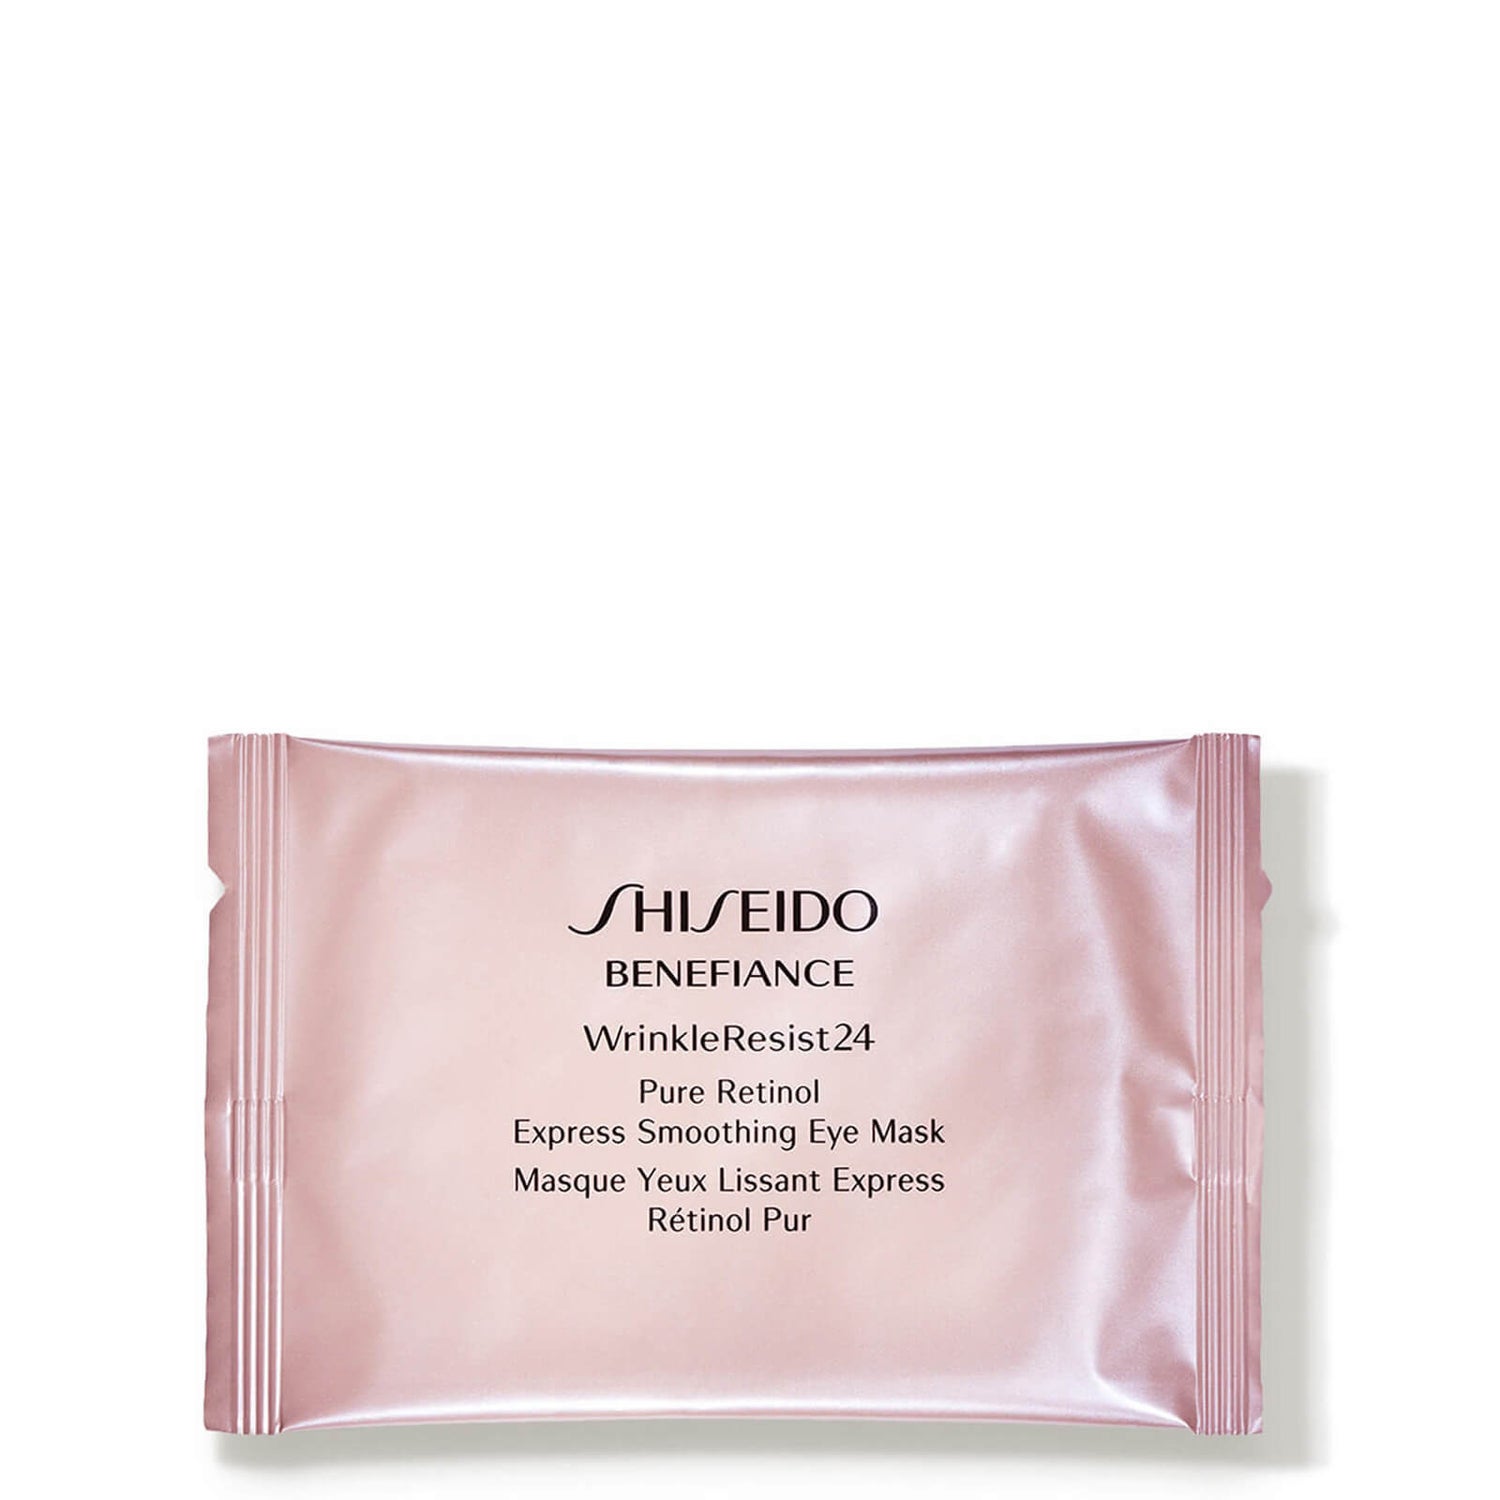 Shiseido Benefiance WrinkleResist24 Pure Retinol Express Smoothing Eye Mask (12 count)